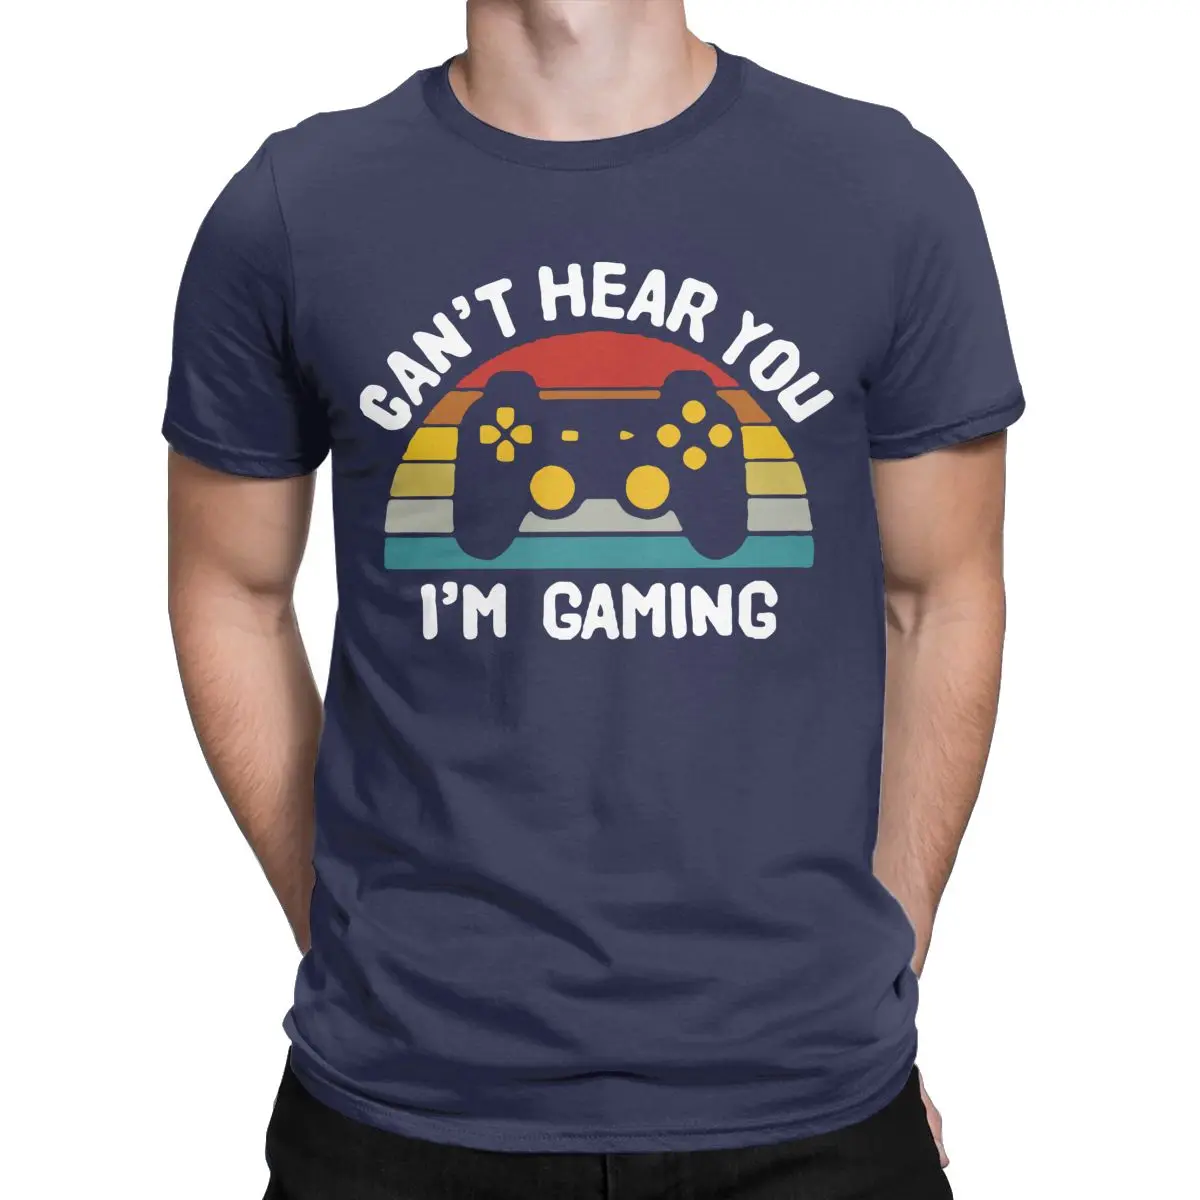 

Can't Hear You I'm Gaming Men's shirt Games Gamer Novelty Tee Shirt Short Sleeve Crewneck T-Shirt Pure Cotton Summer Clothes